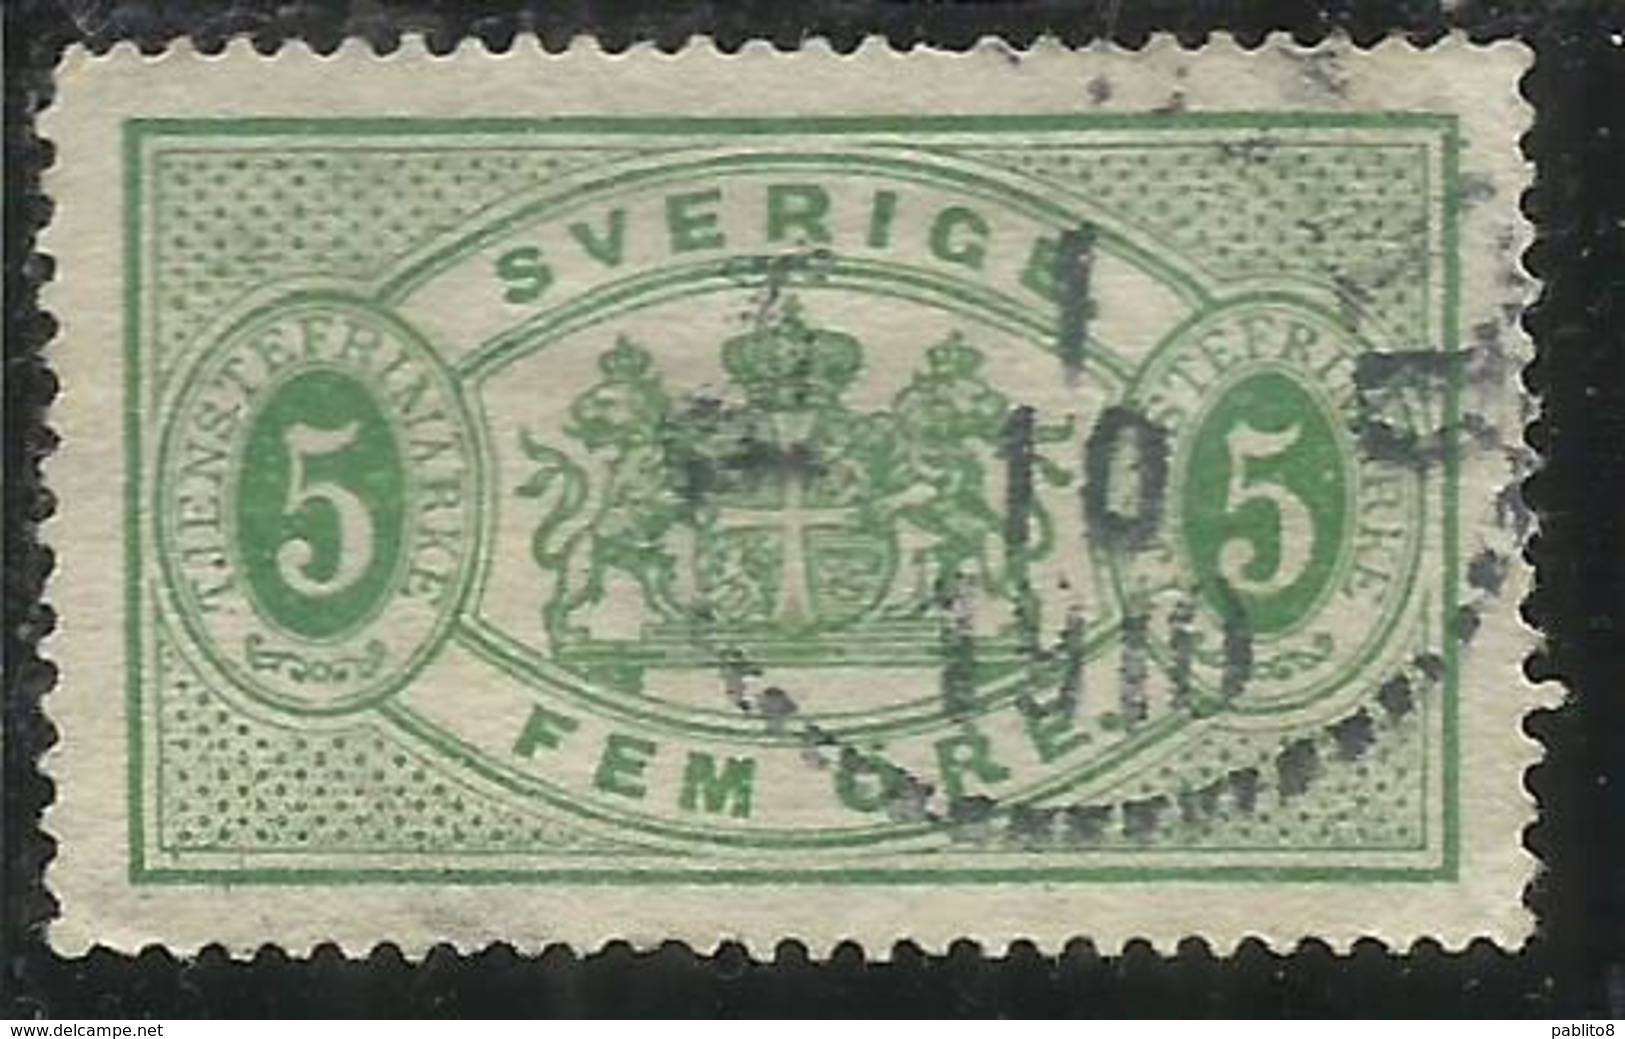 SWEDEN SVERIGE SVEZIA SUEDE 1881 1895 OFFICIAL STAMPS ORE 5o USATO USED OBLITERE' - Steuermarken